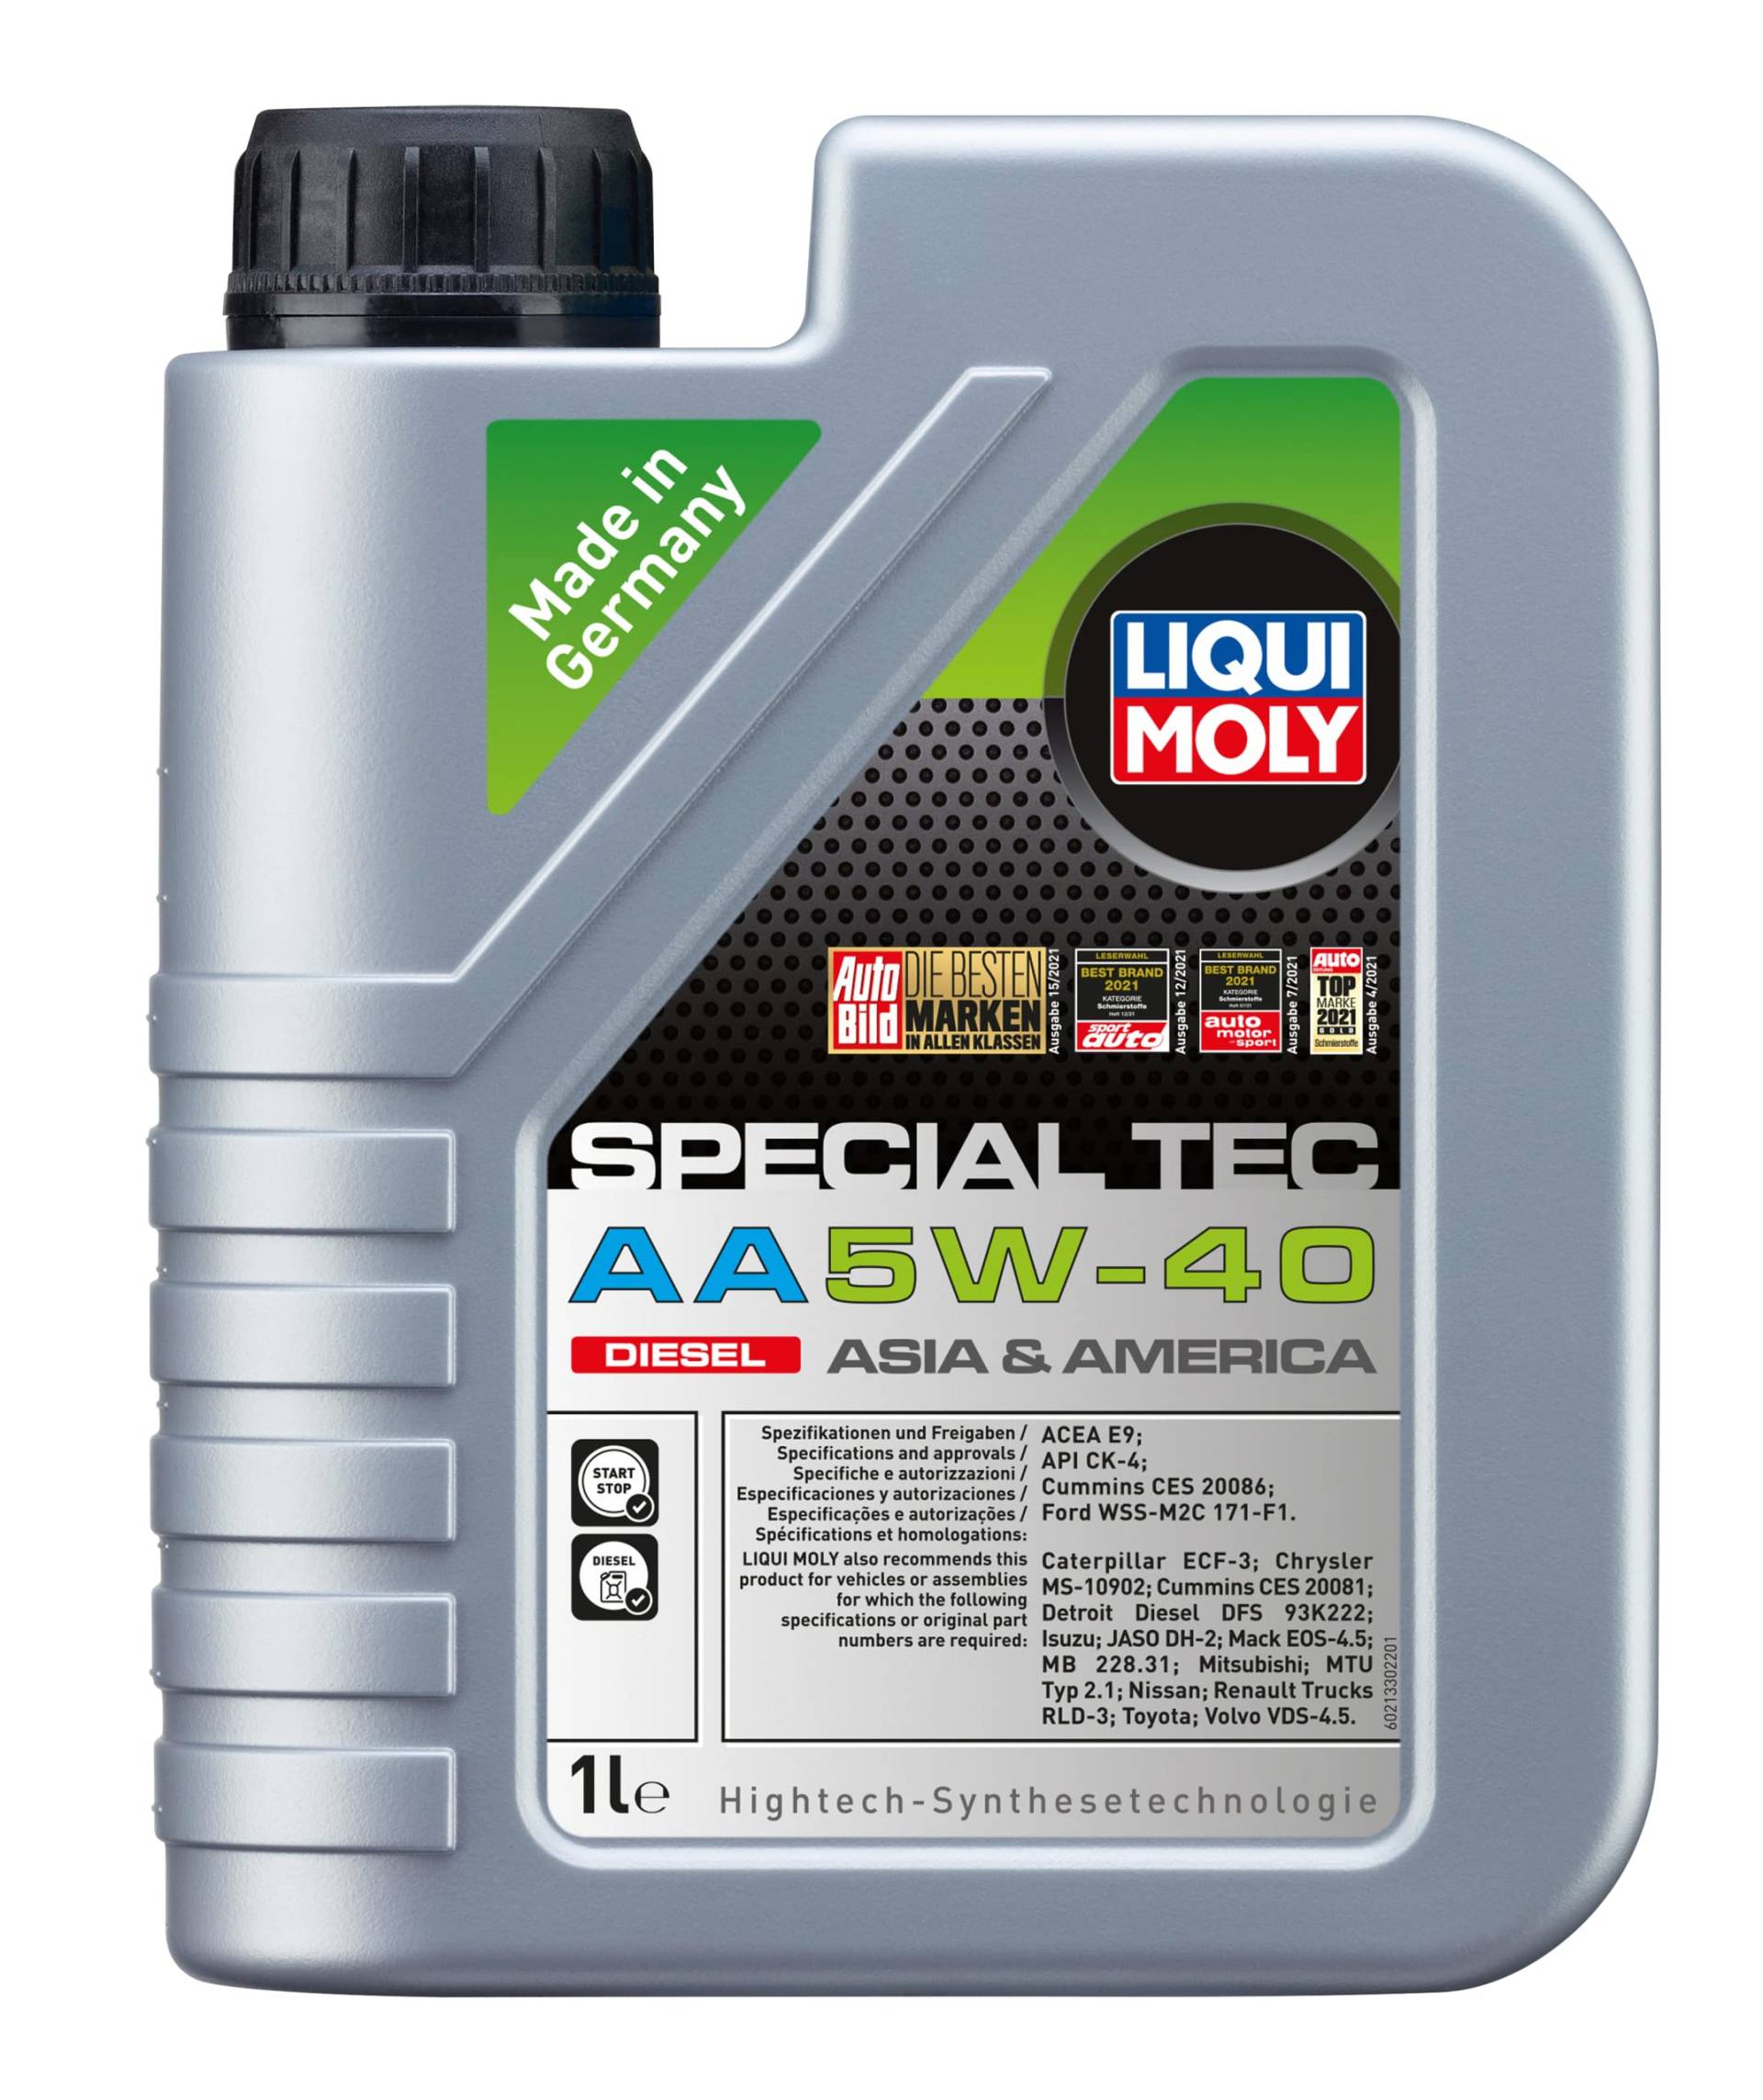 LIQUI MOLY Special Tec AA 5W-40 Diesel | 1 L | Synthesetechnologie Motoröl | Art.-Nr.: 21330 von Liqui Moly